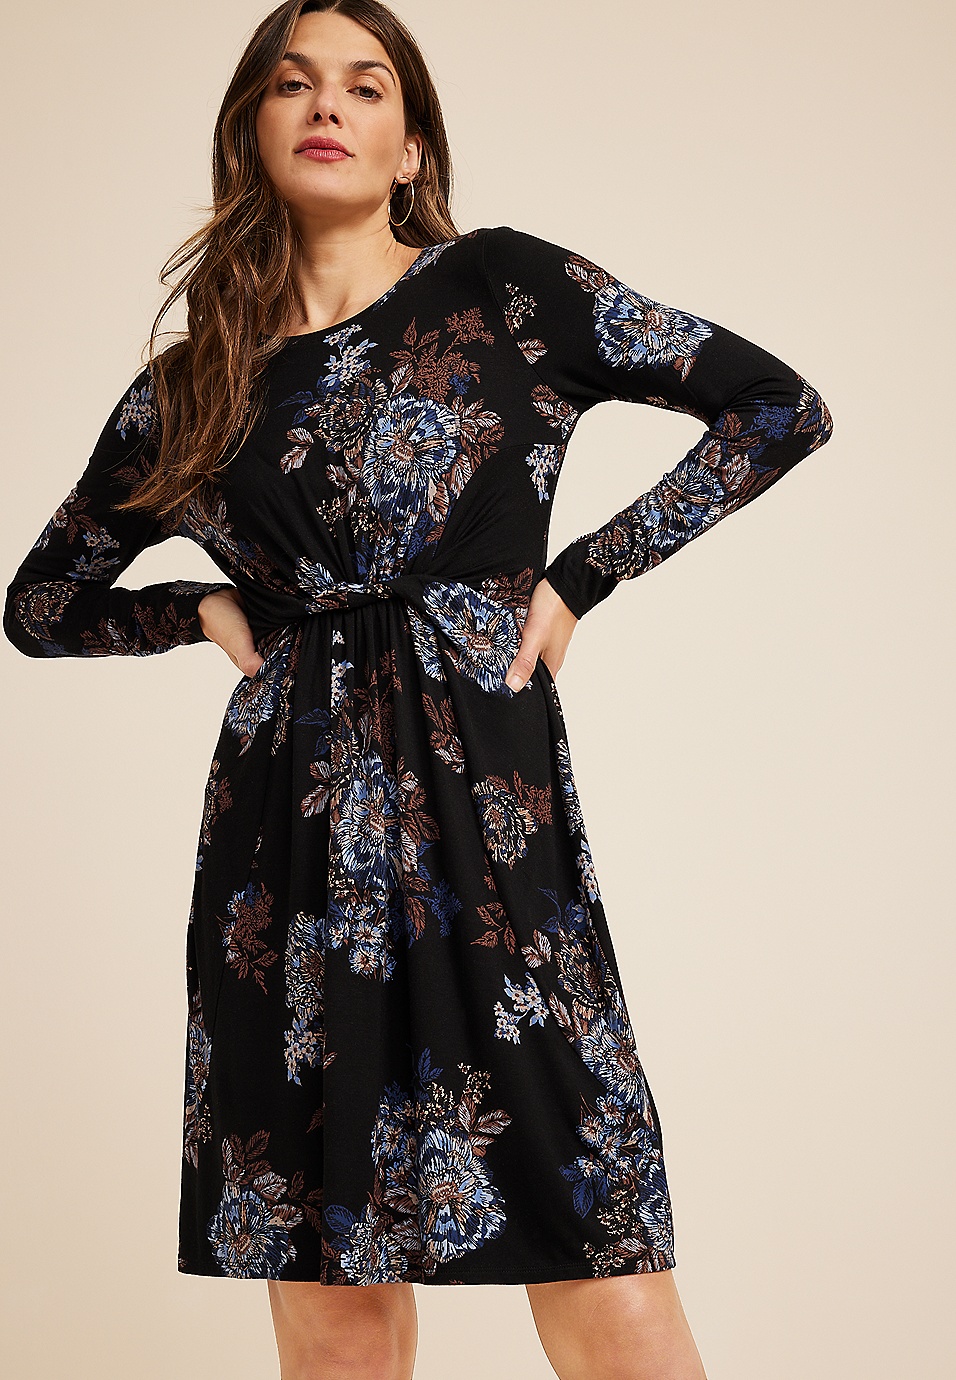 Neiman Marcus Floral Print Mini Dress - Black Dresses, Clothing -  NEMRC47017